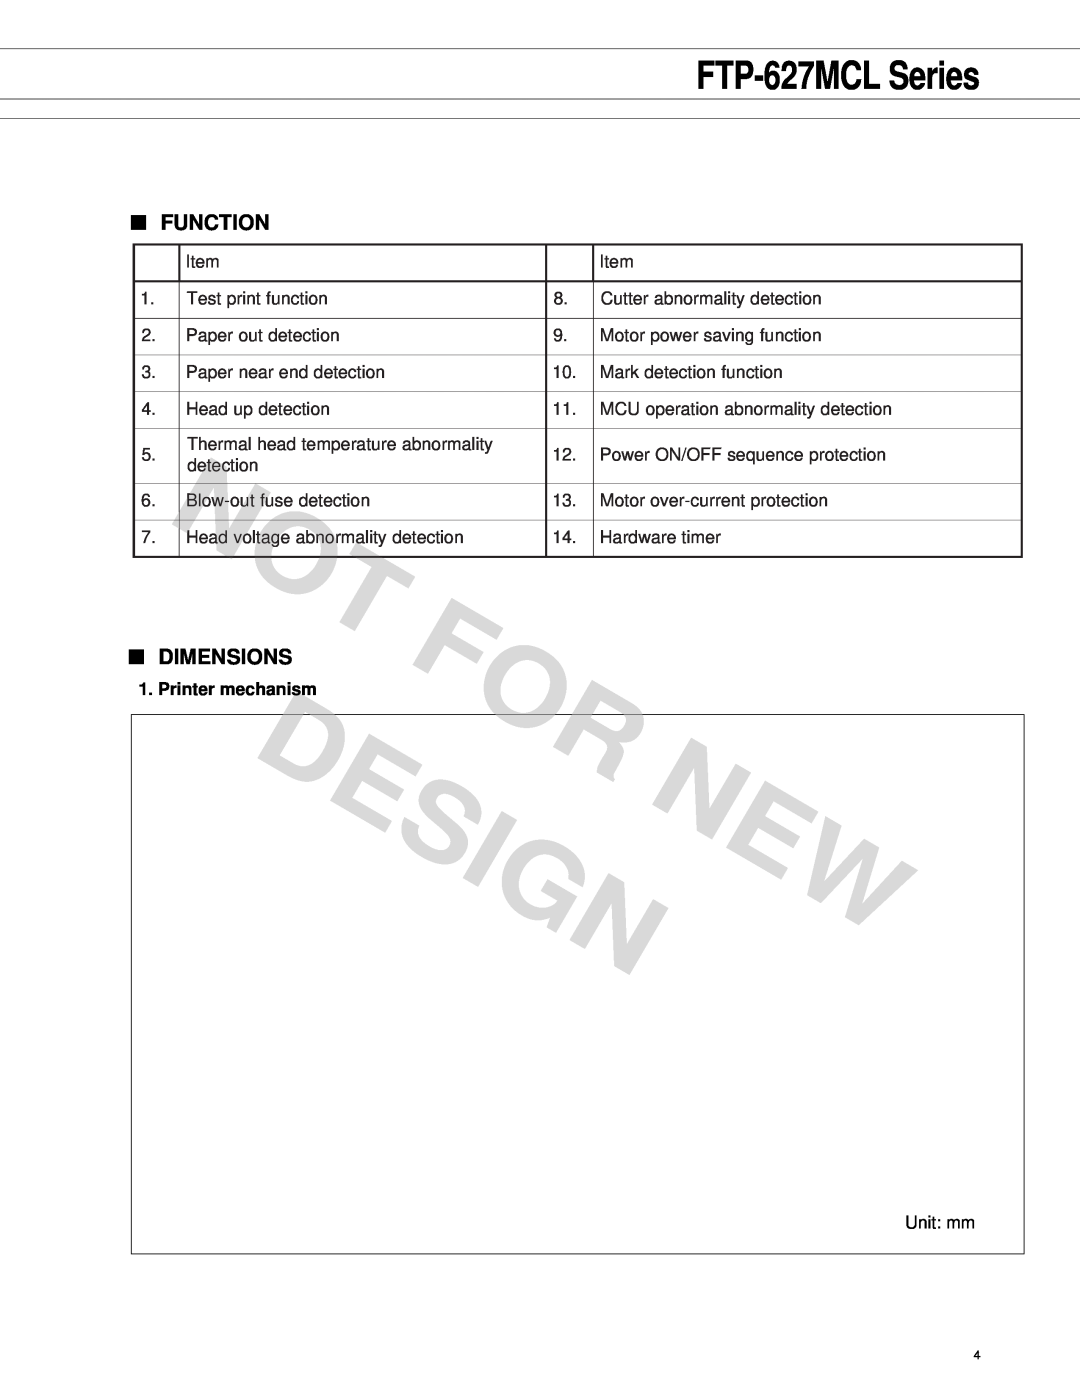 Fujitsu FTP-627 Series manual Function, Dimensions, Designnew, FTP-627MCL Series 